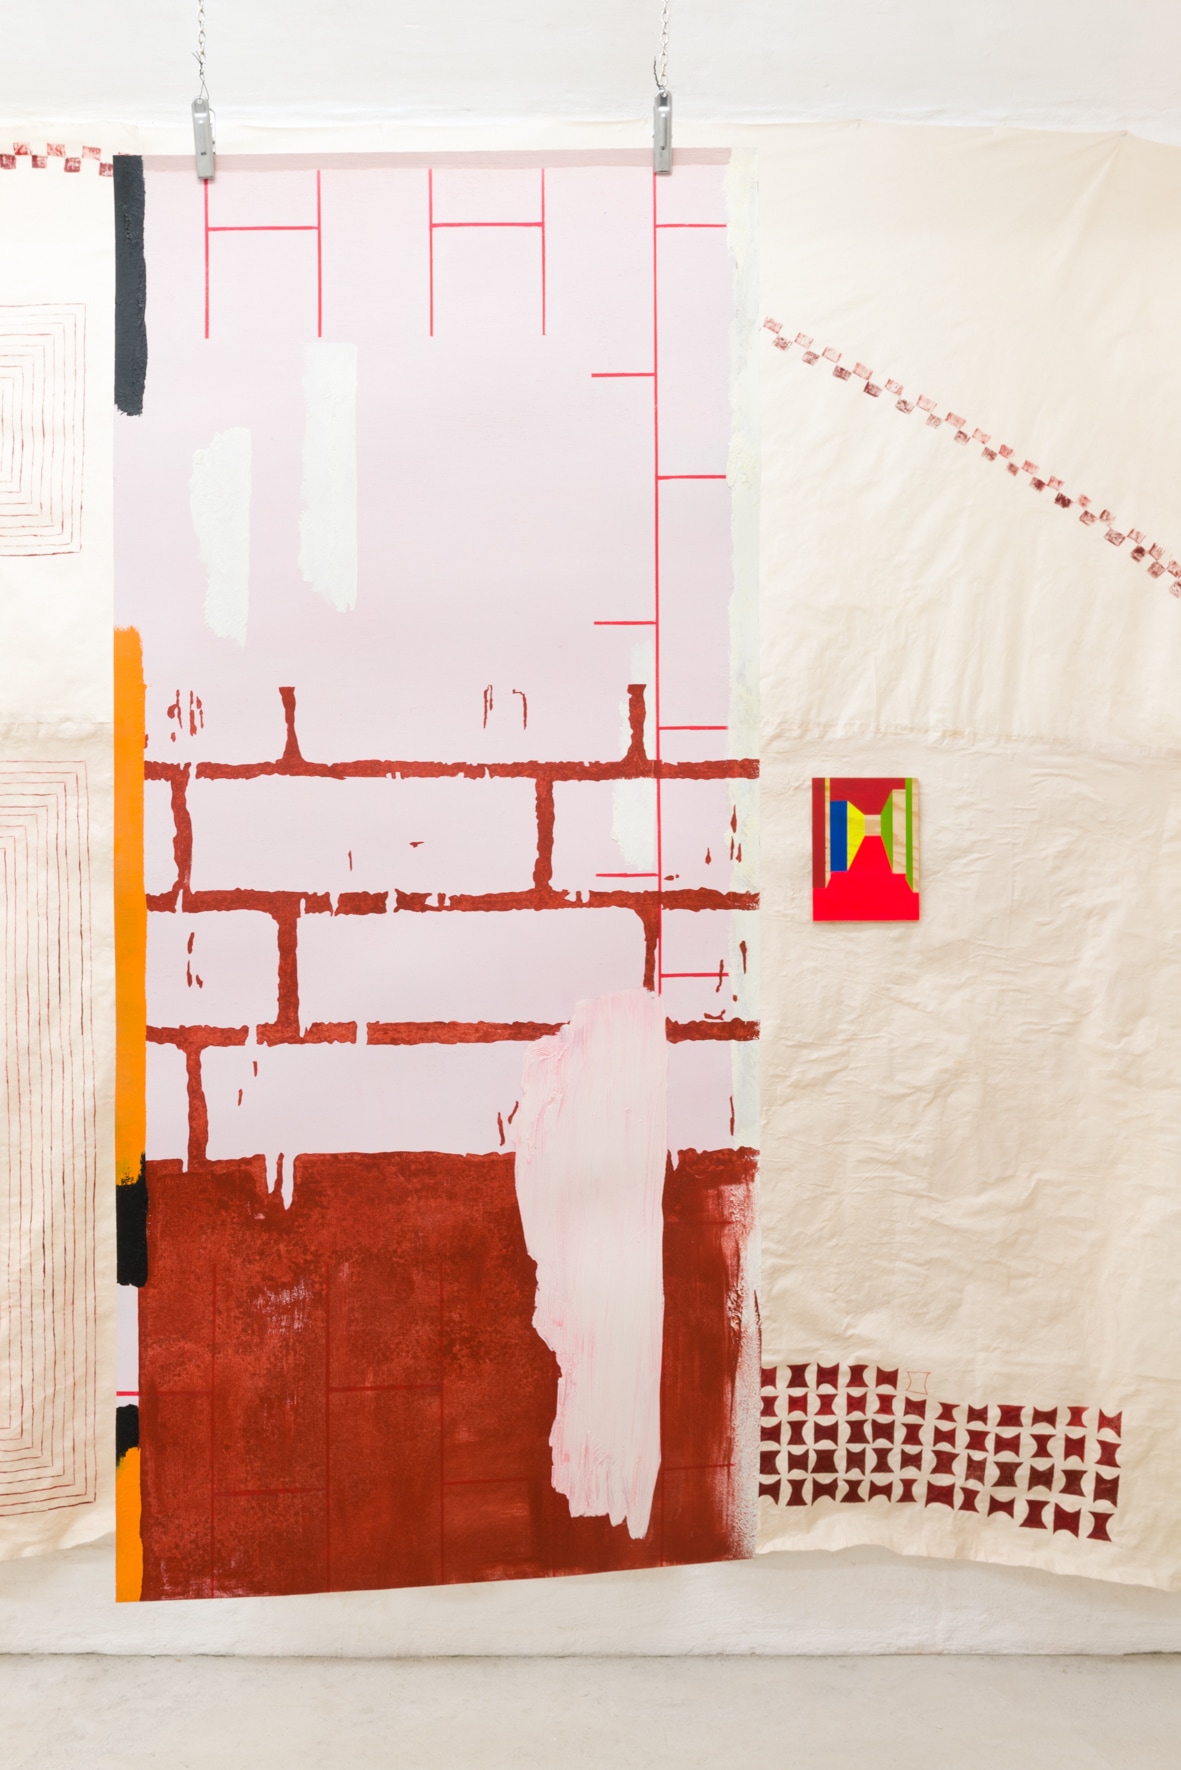 Sonia Almeida, Liminal score, 2021
Oil paint on wood veneer, 117 x 51 cm